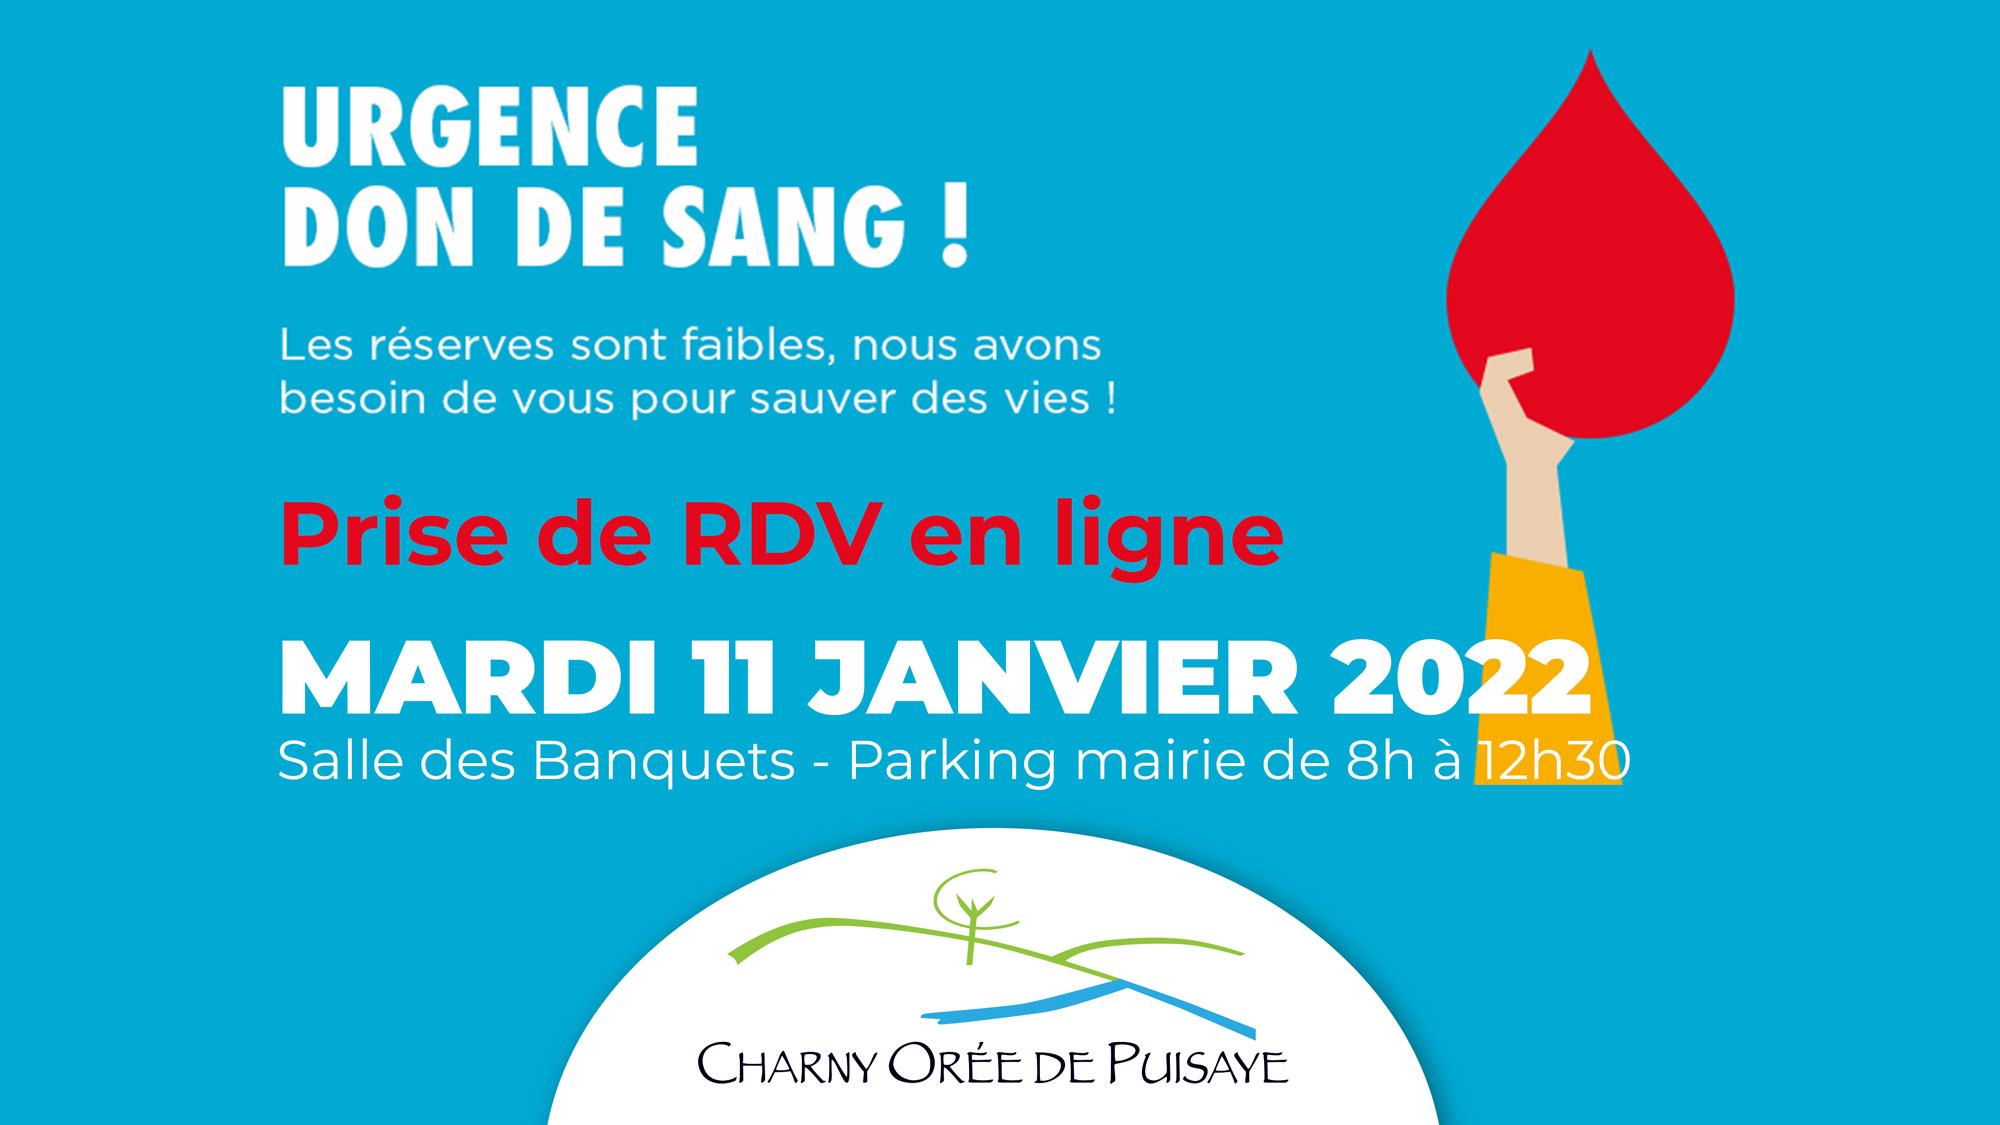 Don du sang mardi 11 janvier 2022 Charny Orée de Puisaye